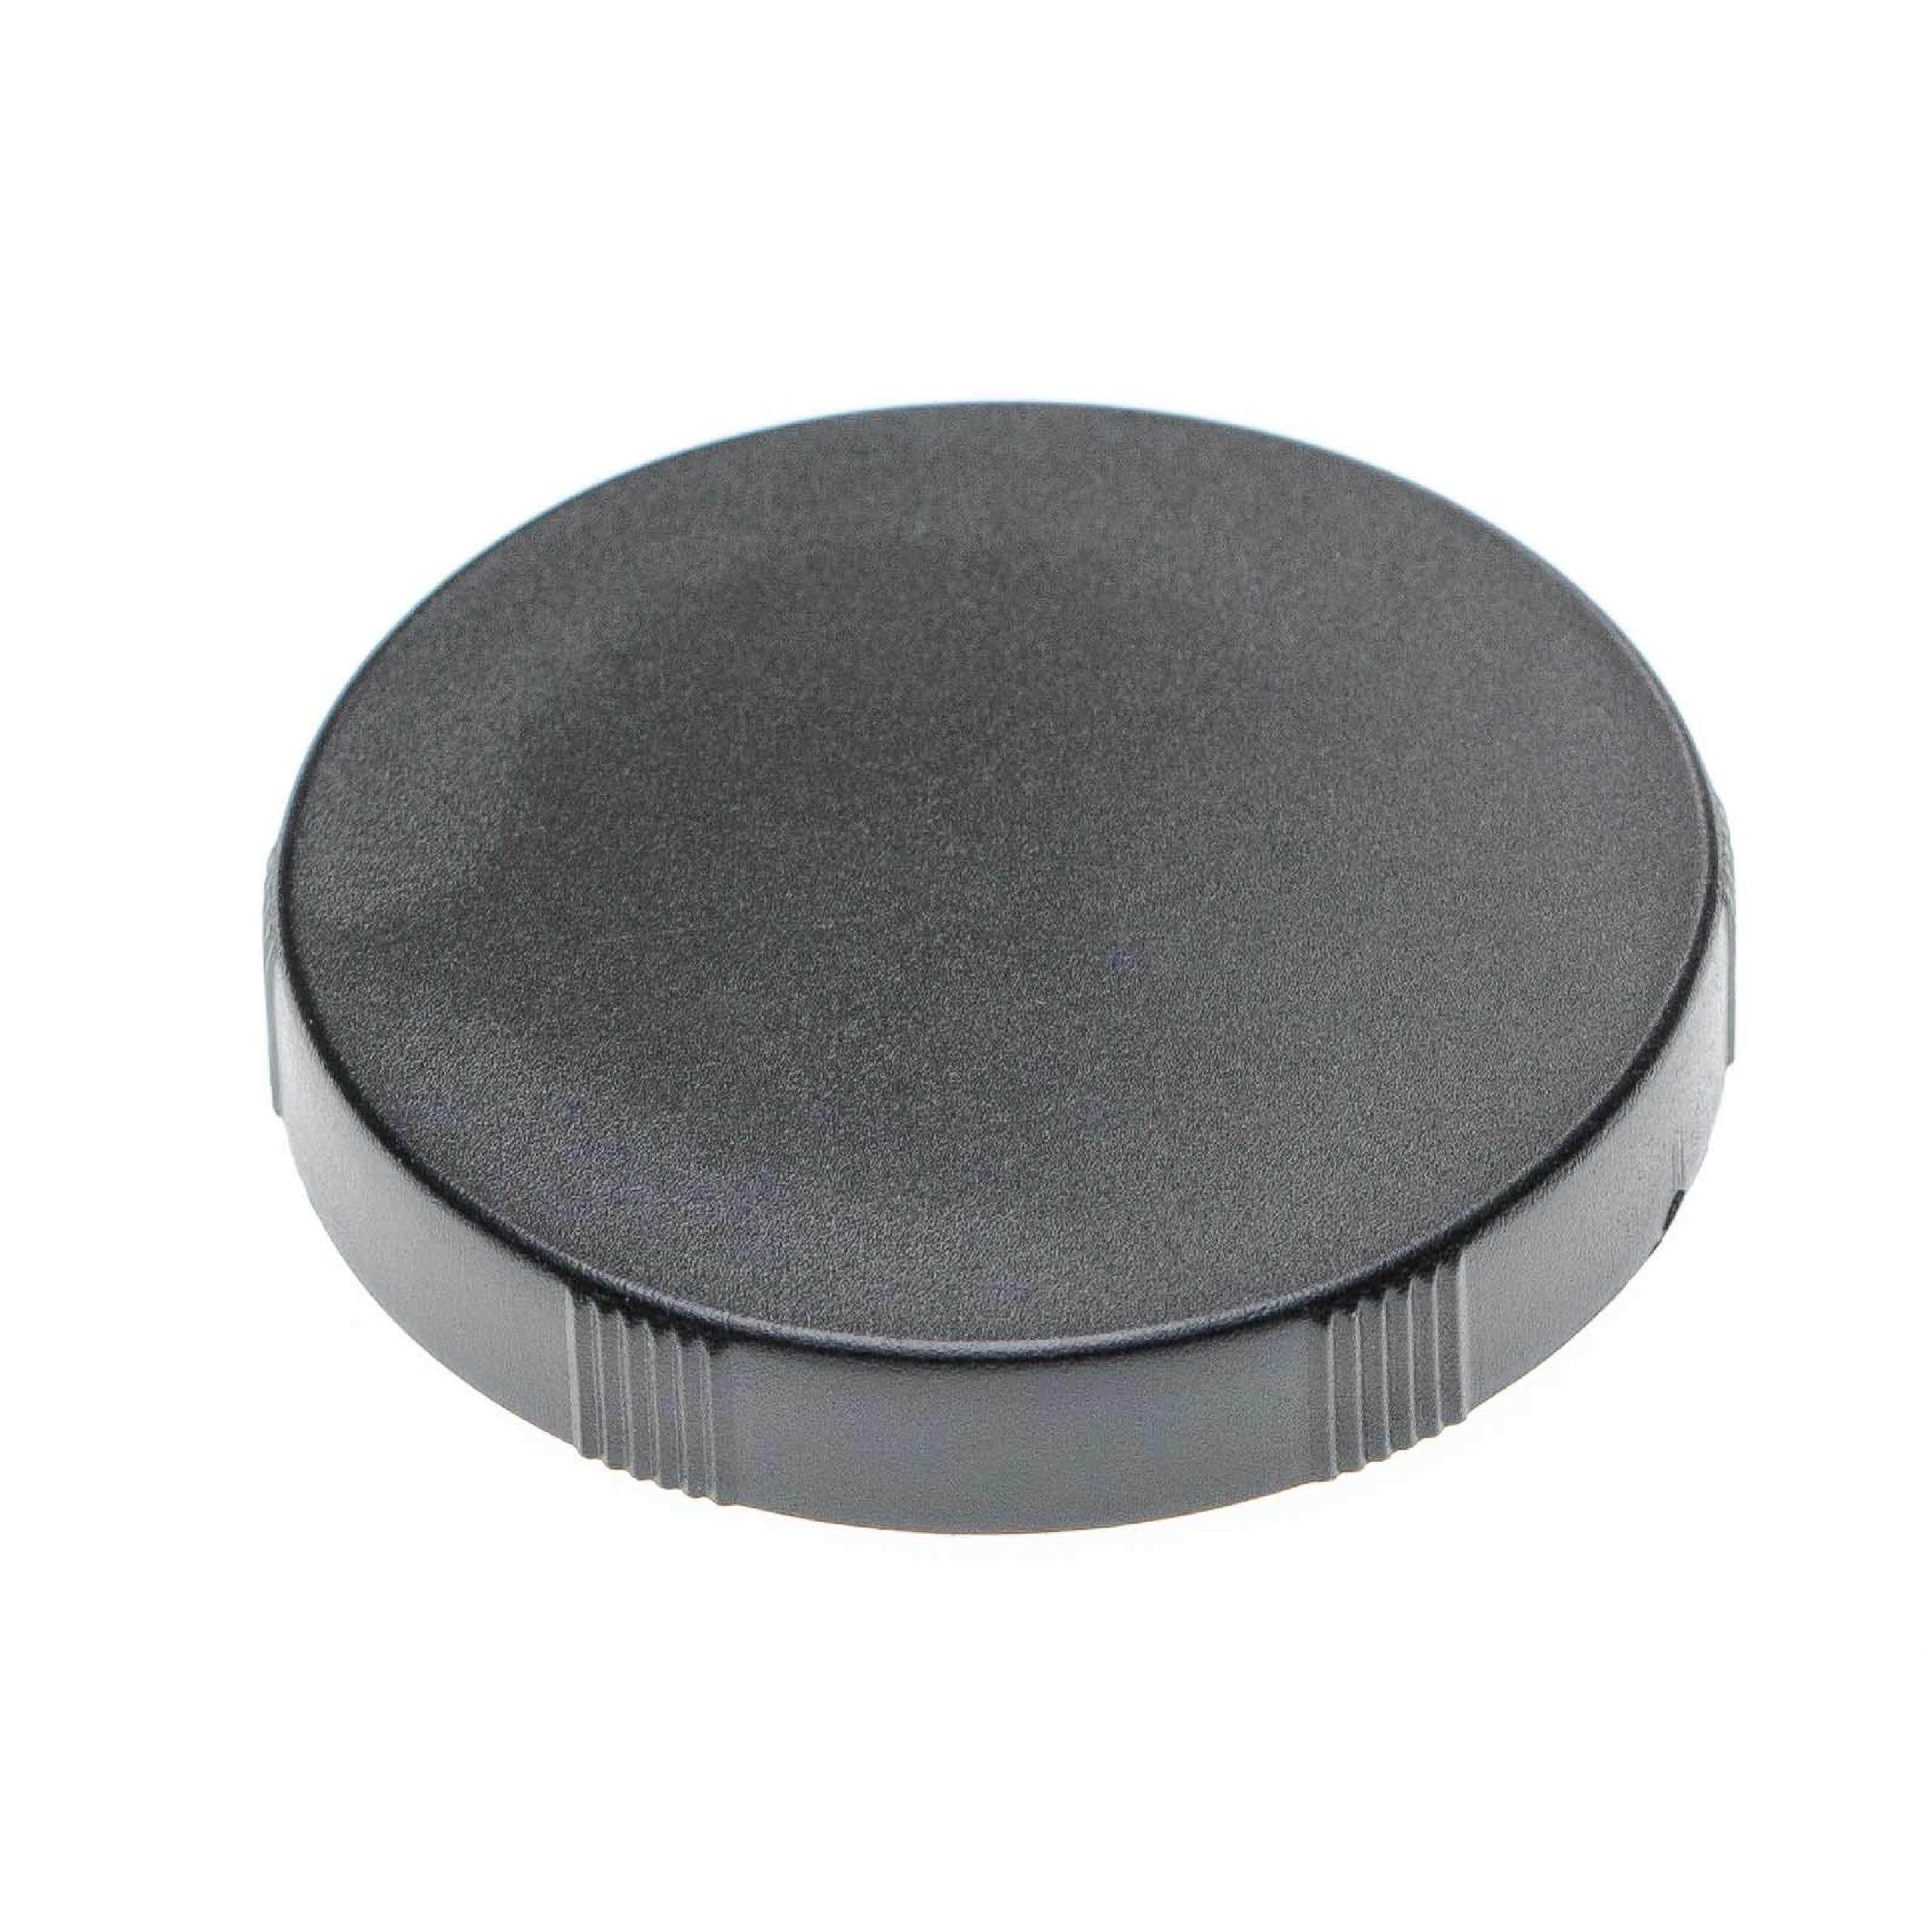 Lens Cap suitable for Binocular Lens with 45 mm Diameter - Black, Detachable